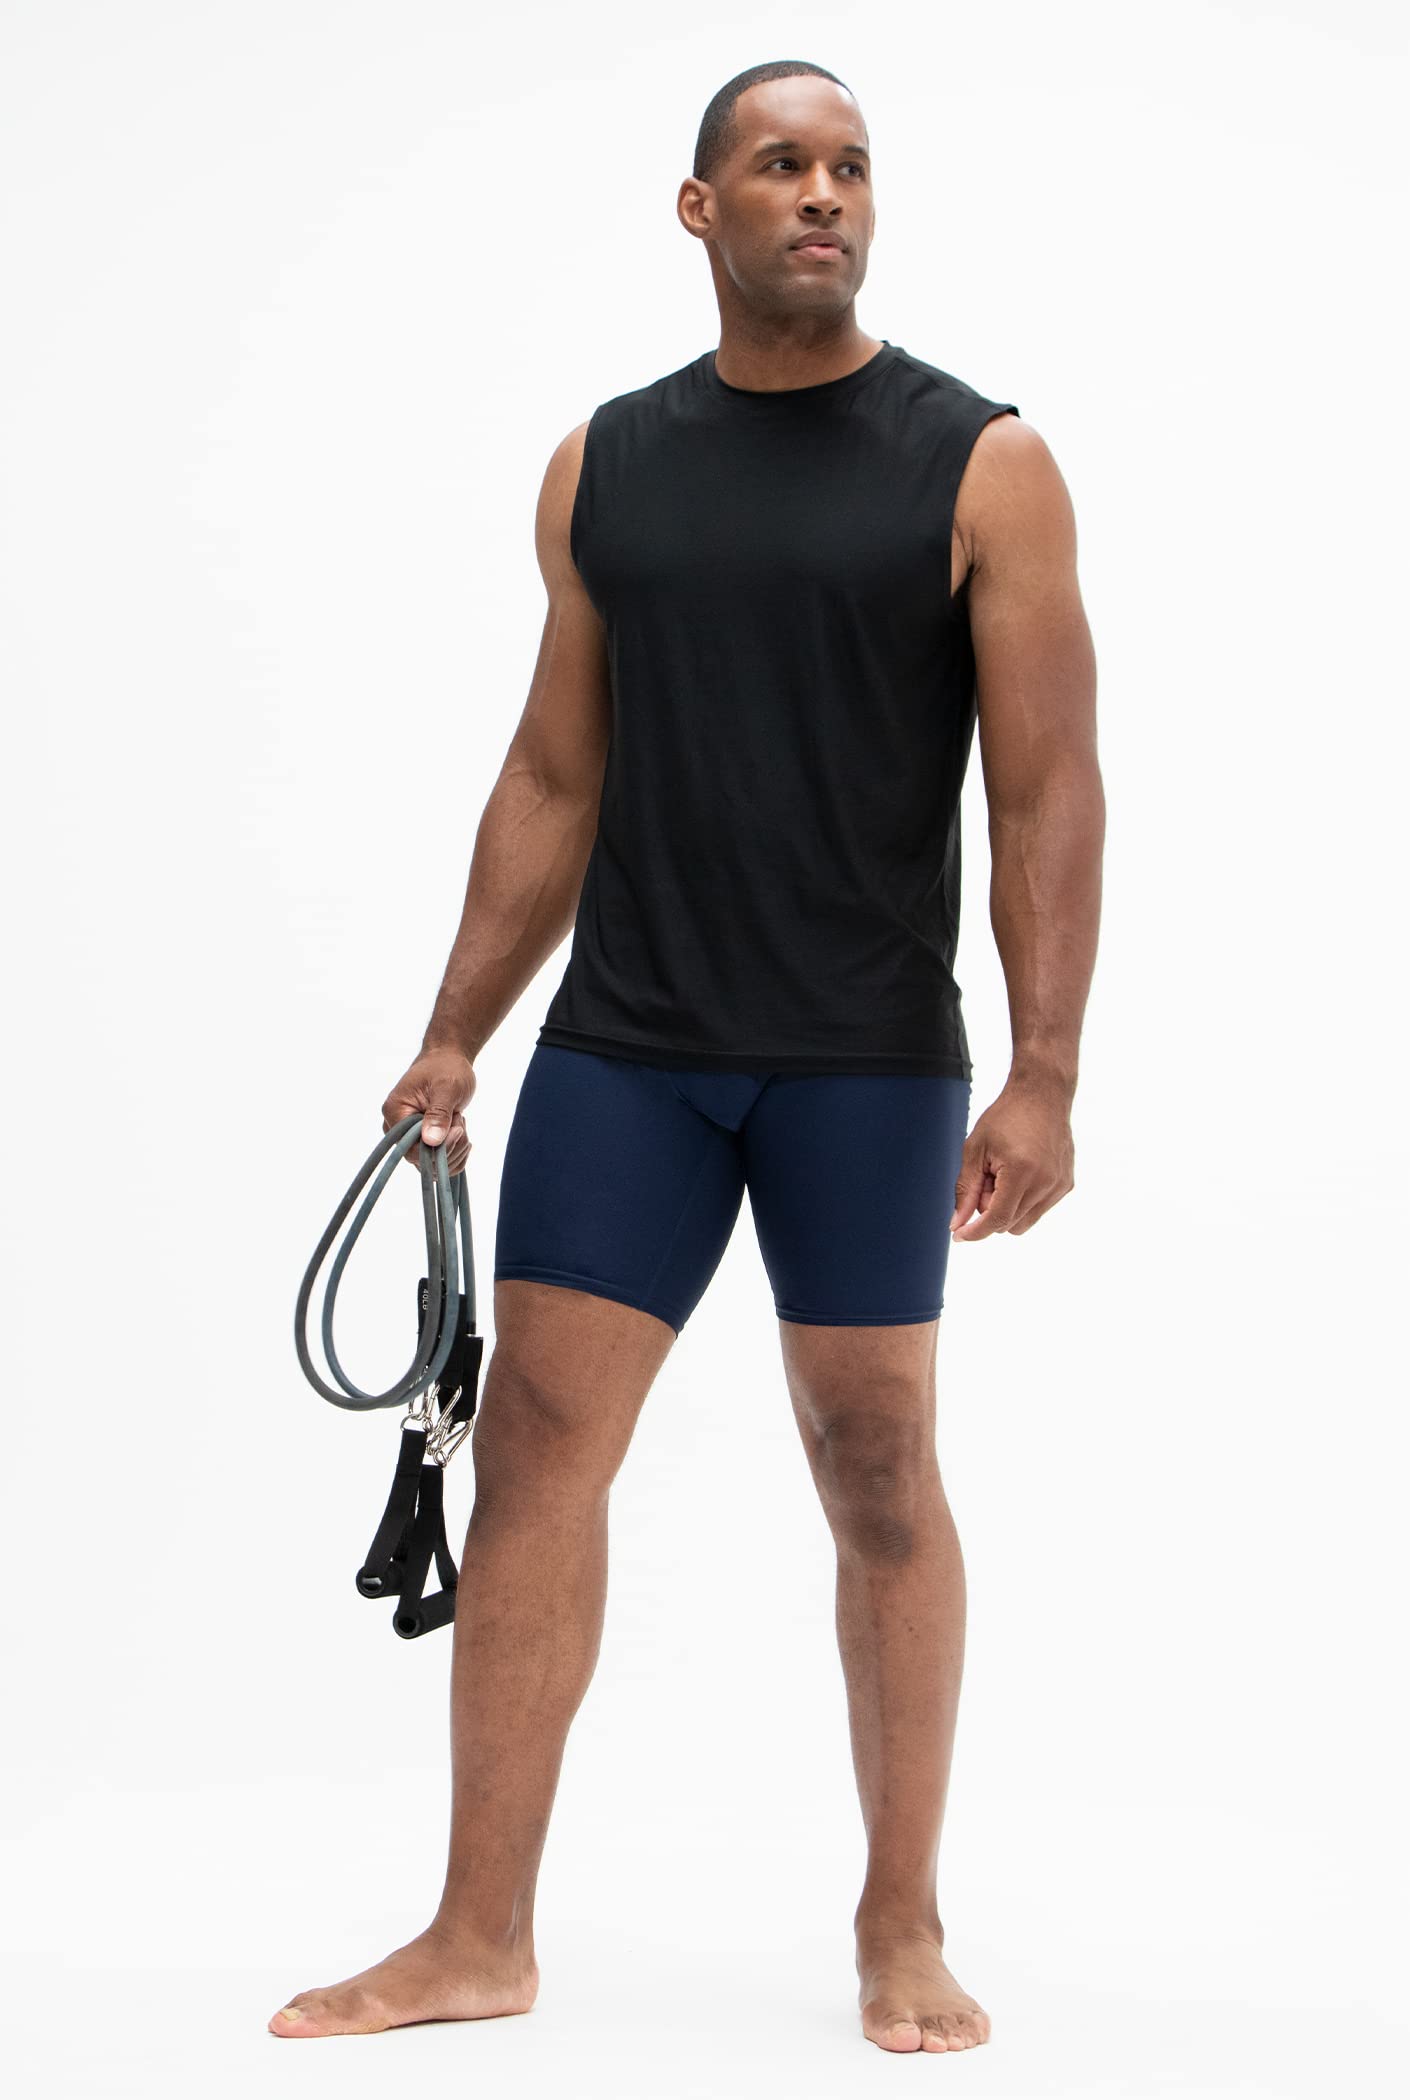 DEVOPS 3 or 5 Pack Compression Shorts Men Spandex Sport Shorts Athletic  Workout Running Performance Baselayer Underwear